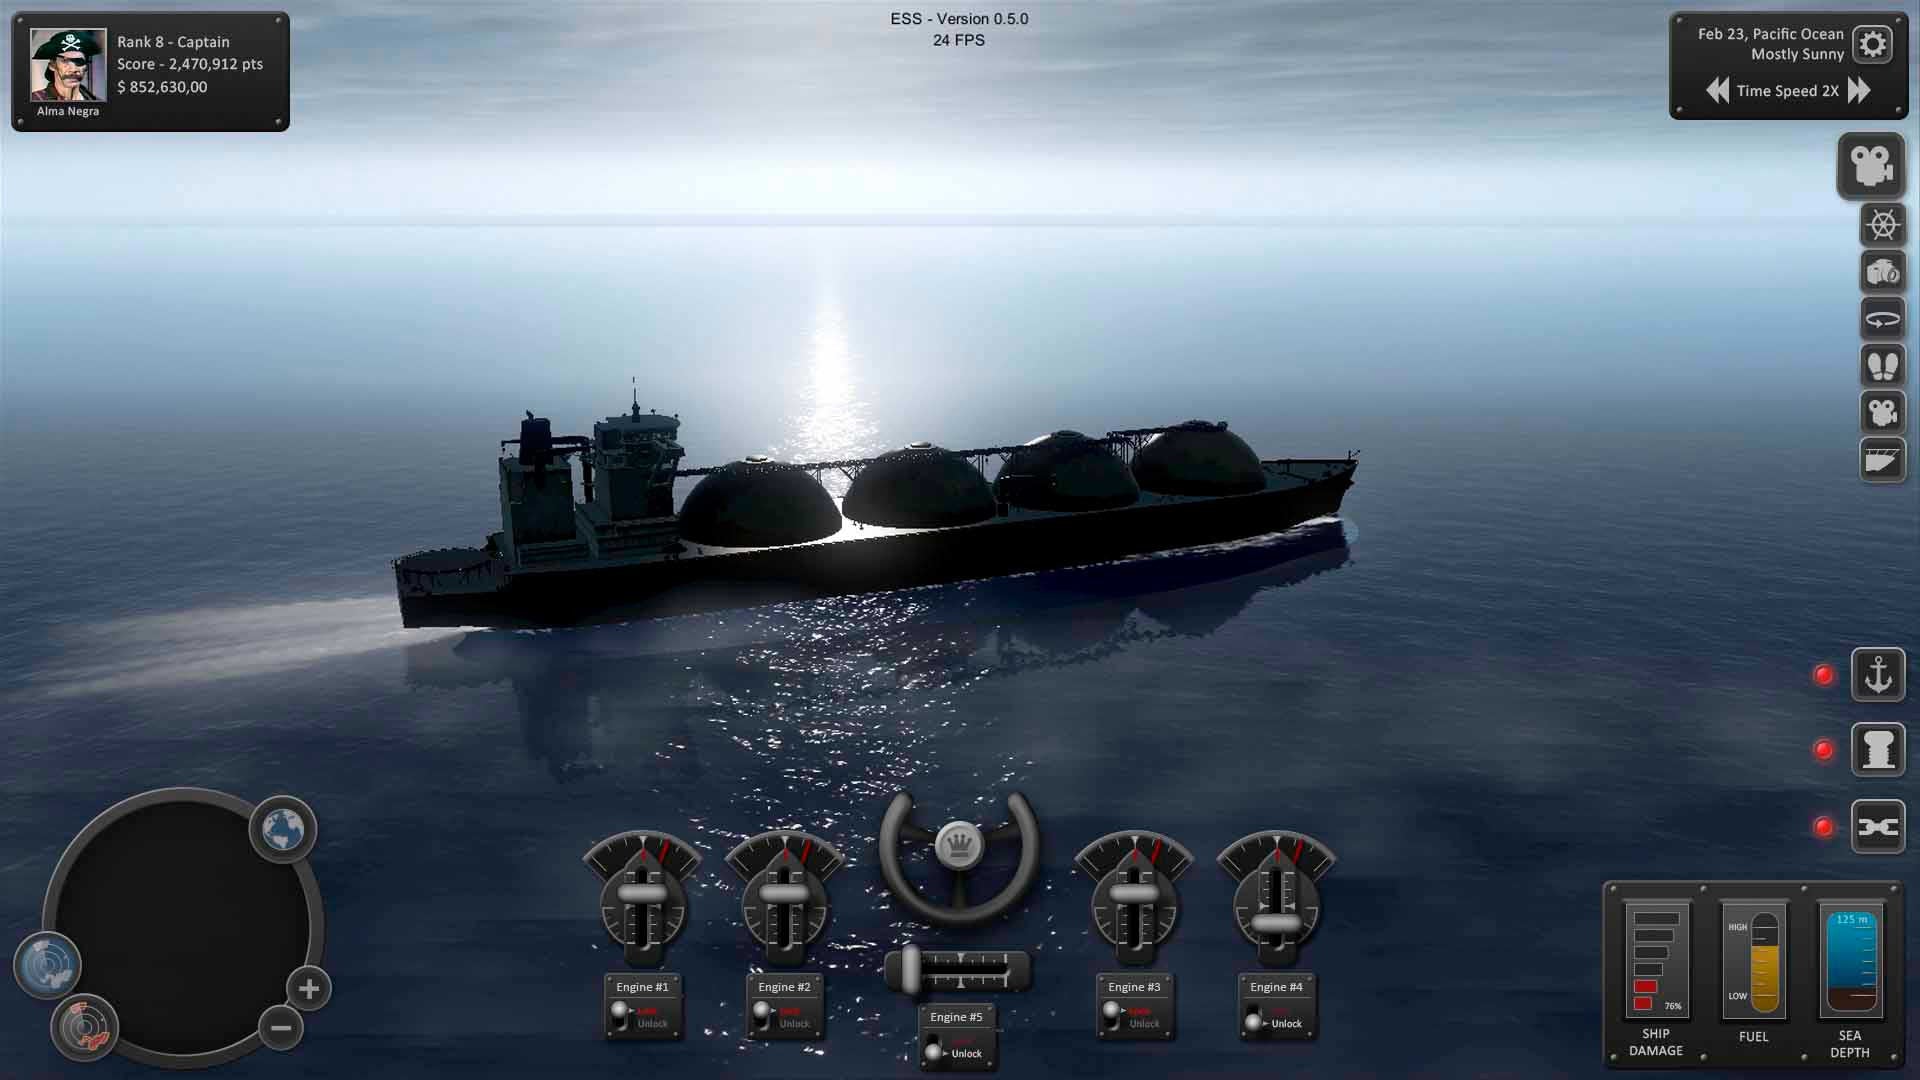 ship simulator online free